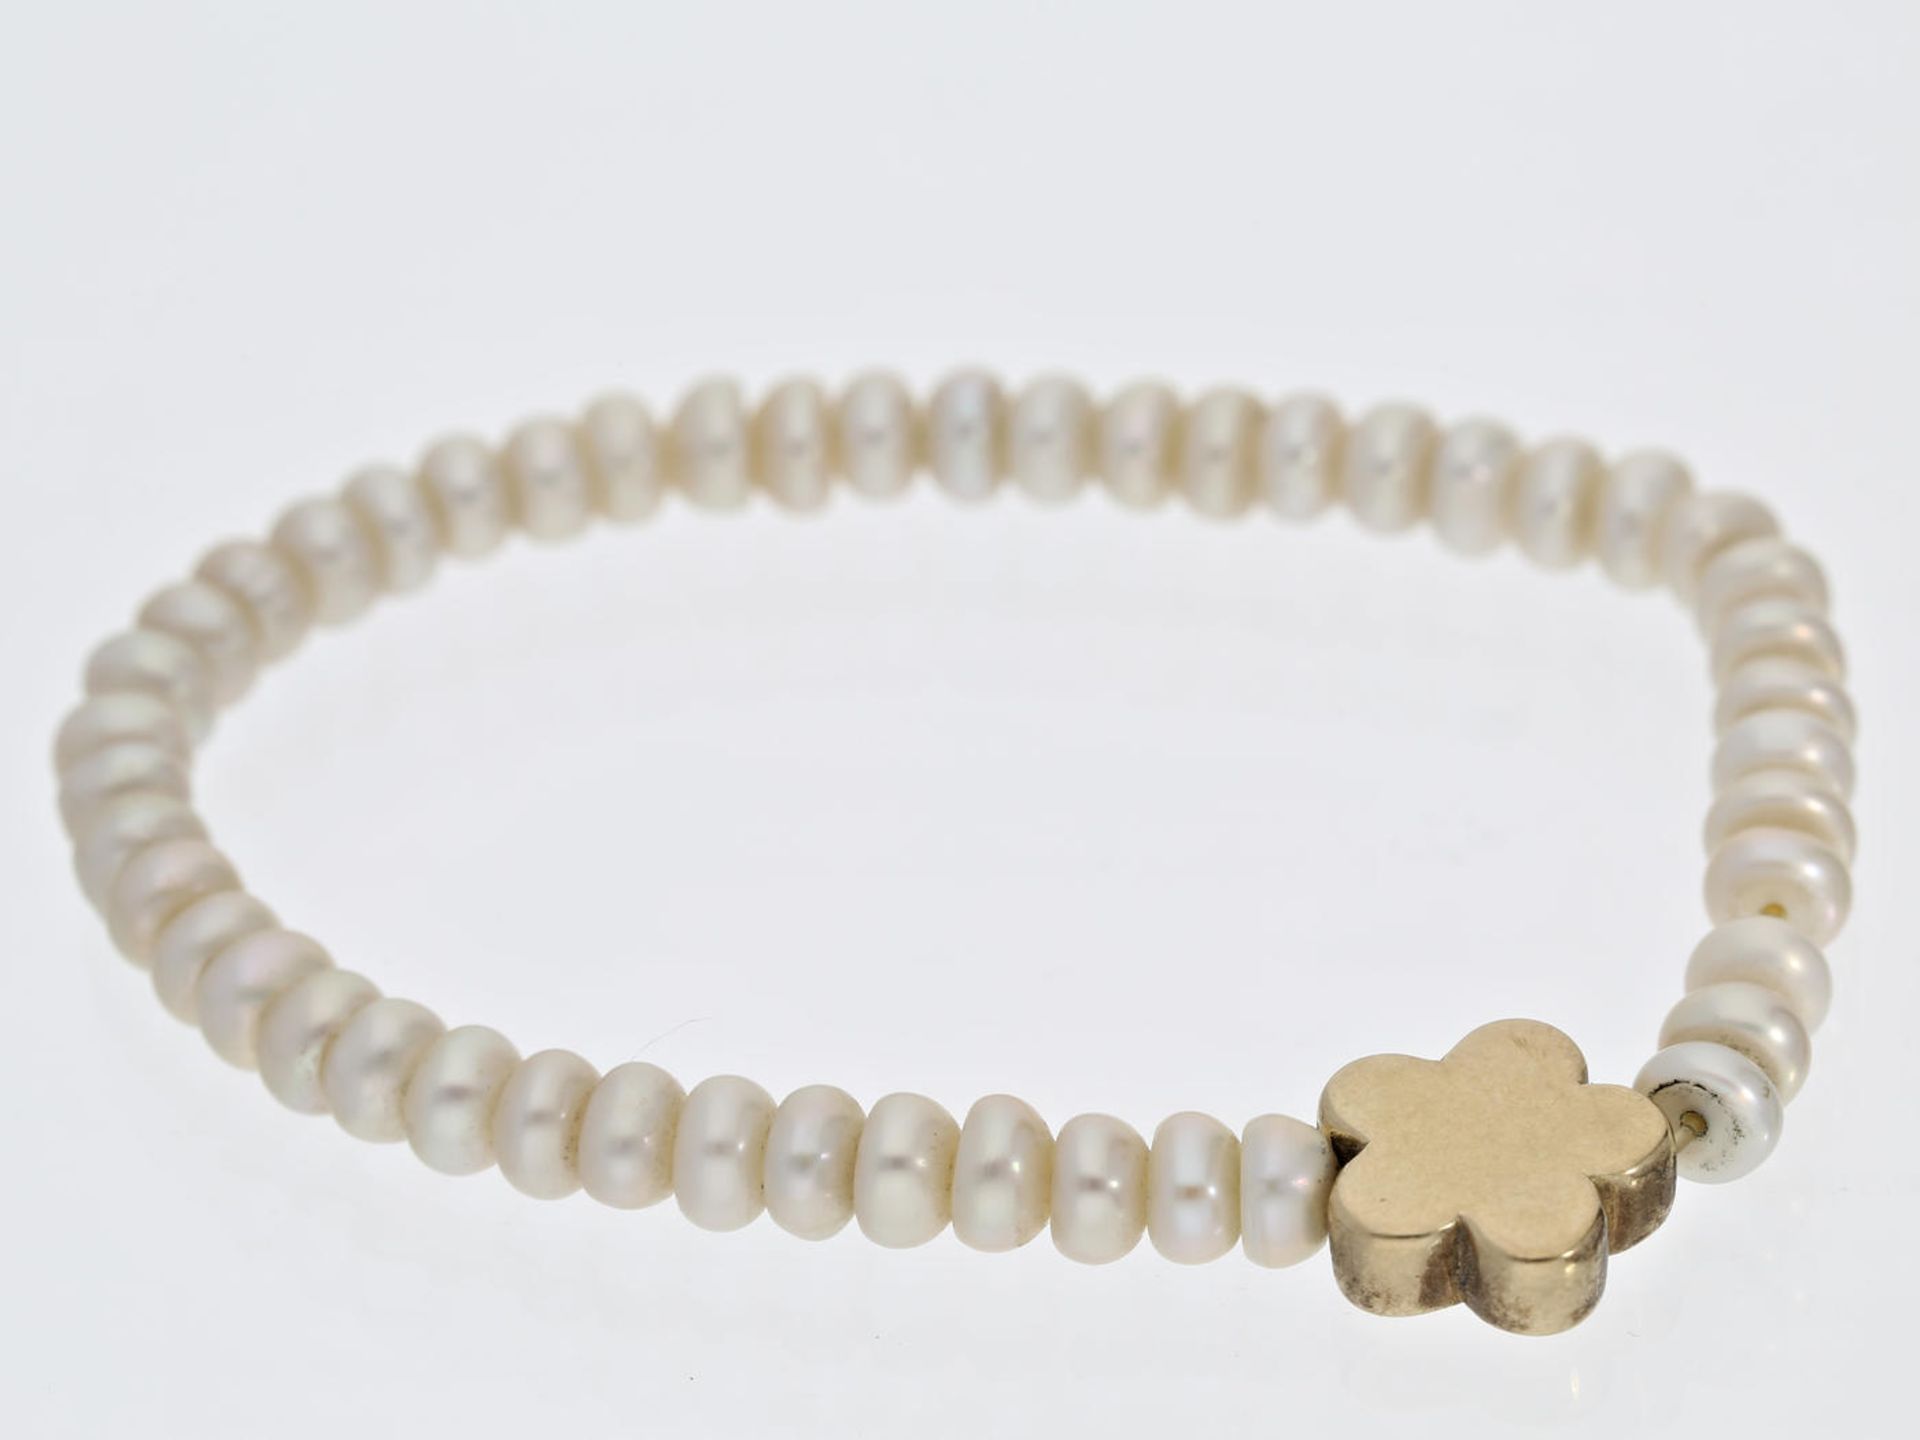 Armband: Perlenarmband mit 18K Goldelement Ca. Ø55mm, linsenförmige Perlen von ca. Ø5mm, flexibles